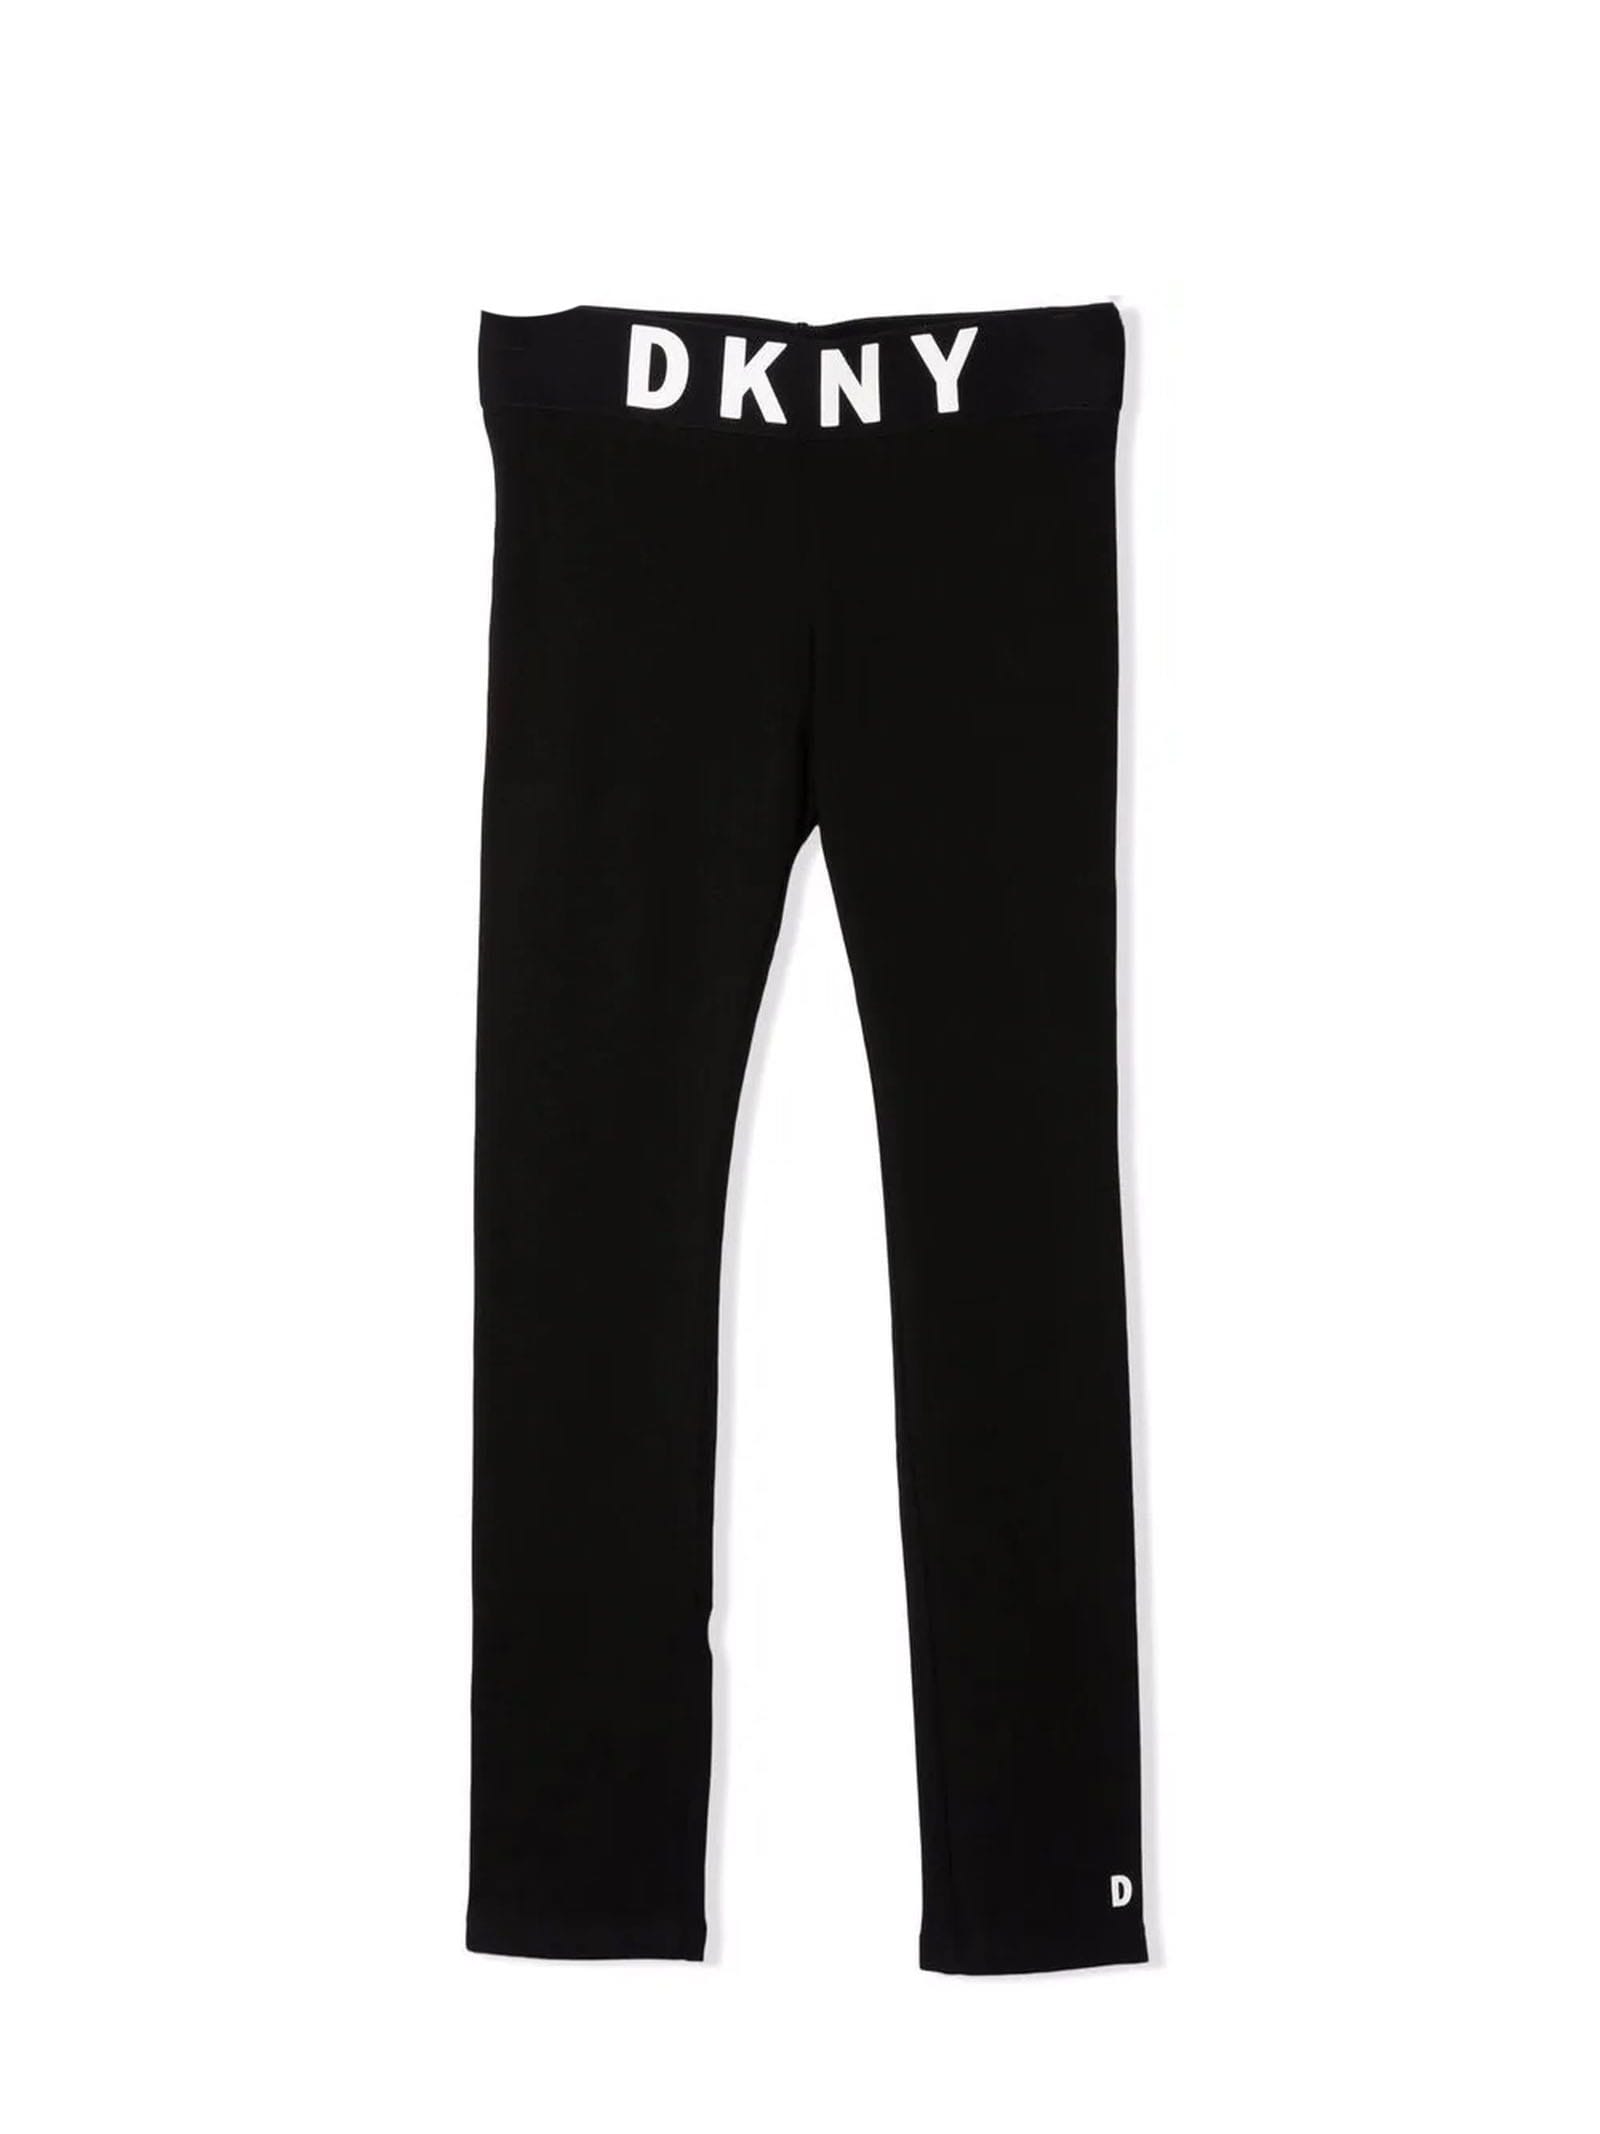 DKNY Black Stretch Cotton-blend Trousers